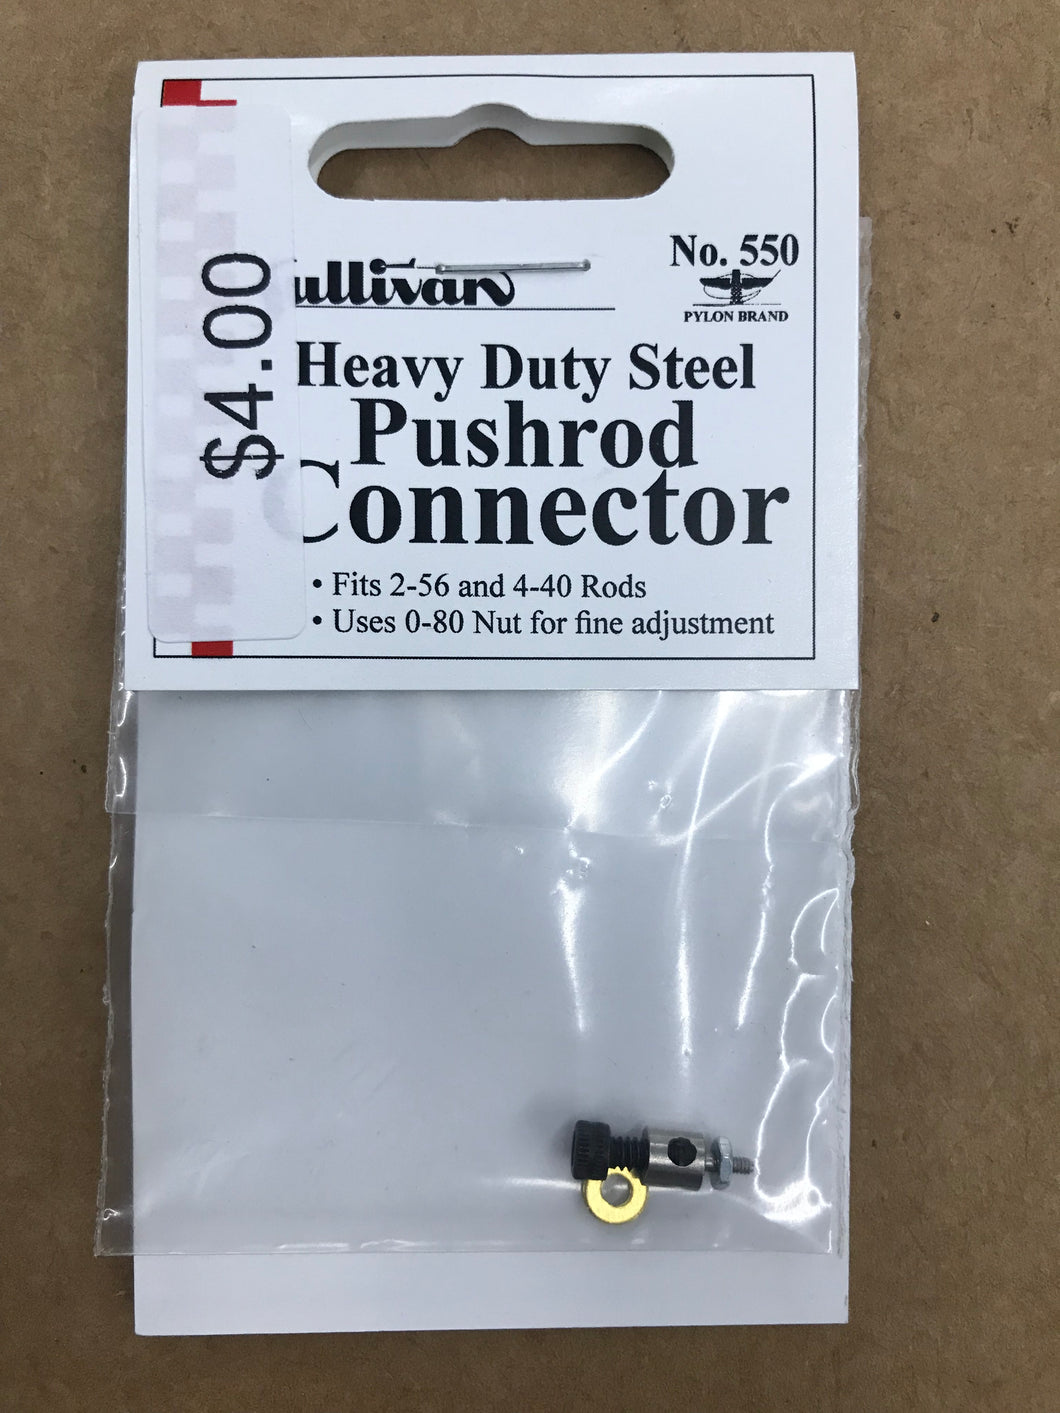 Sullivan Heavy Duty Steel Pushrod Connector, 4-40